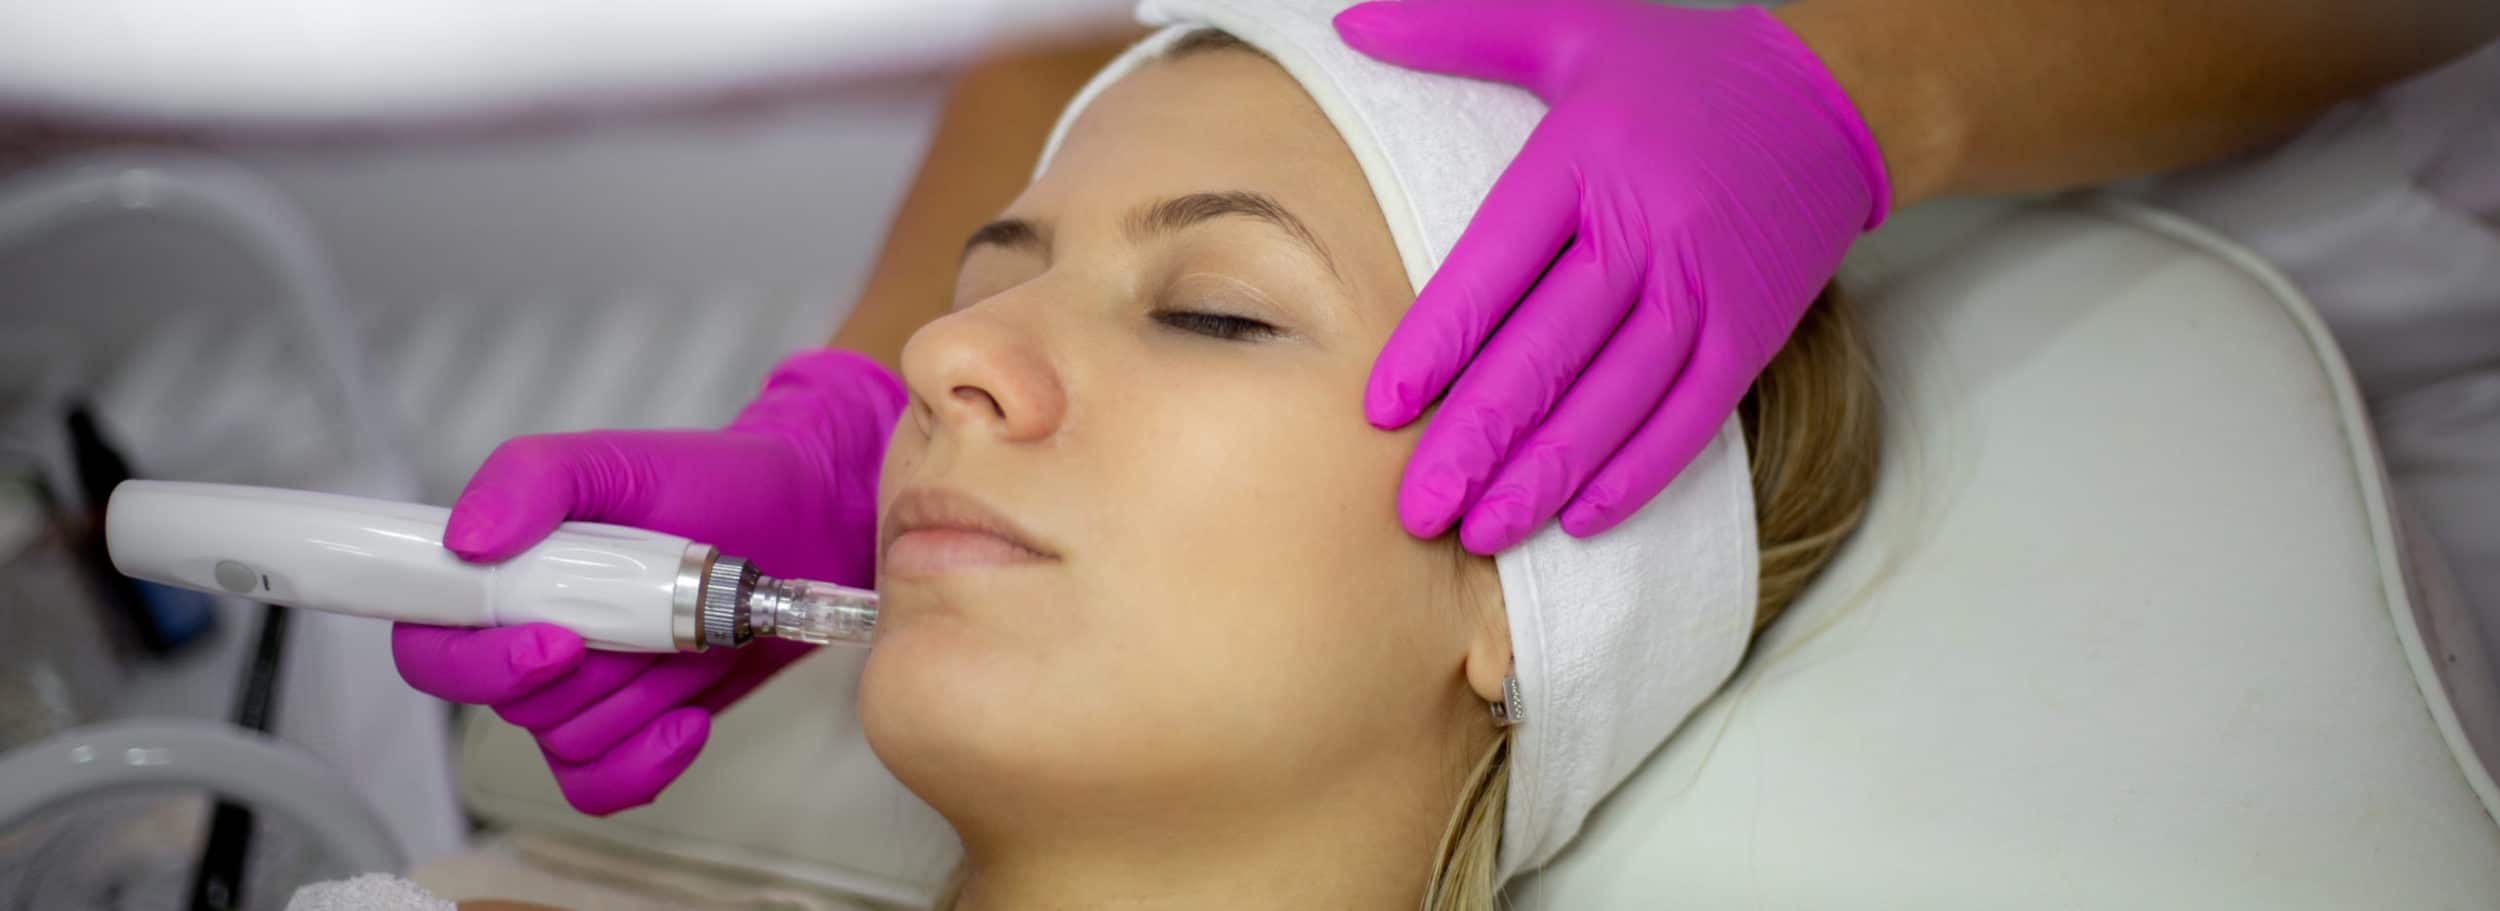 Facial treatment with dermapen in the beauty salon